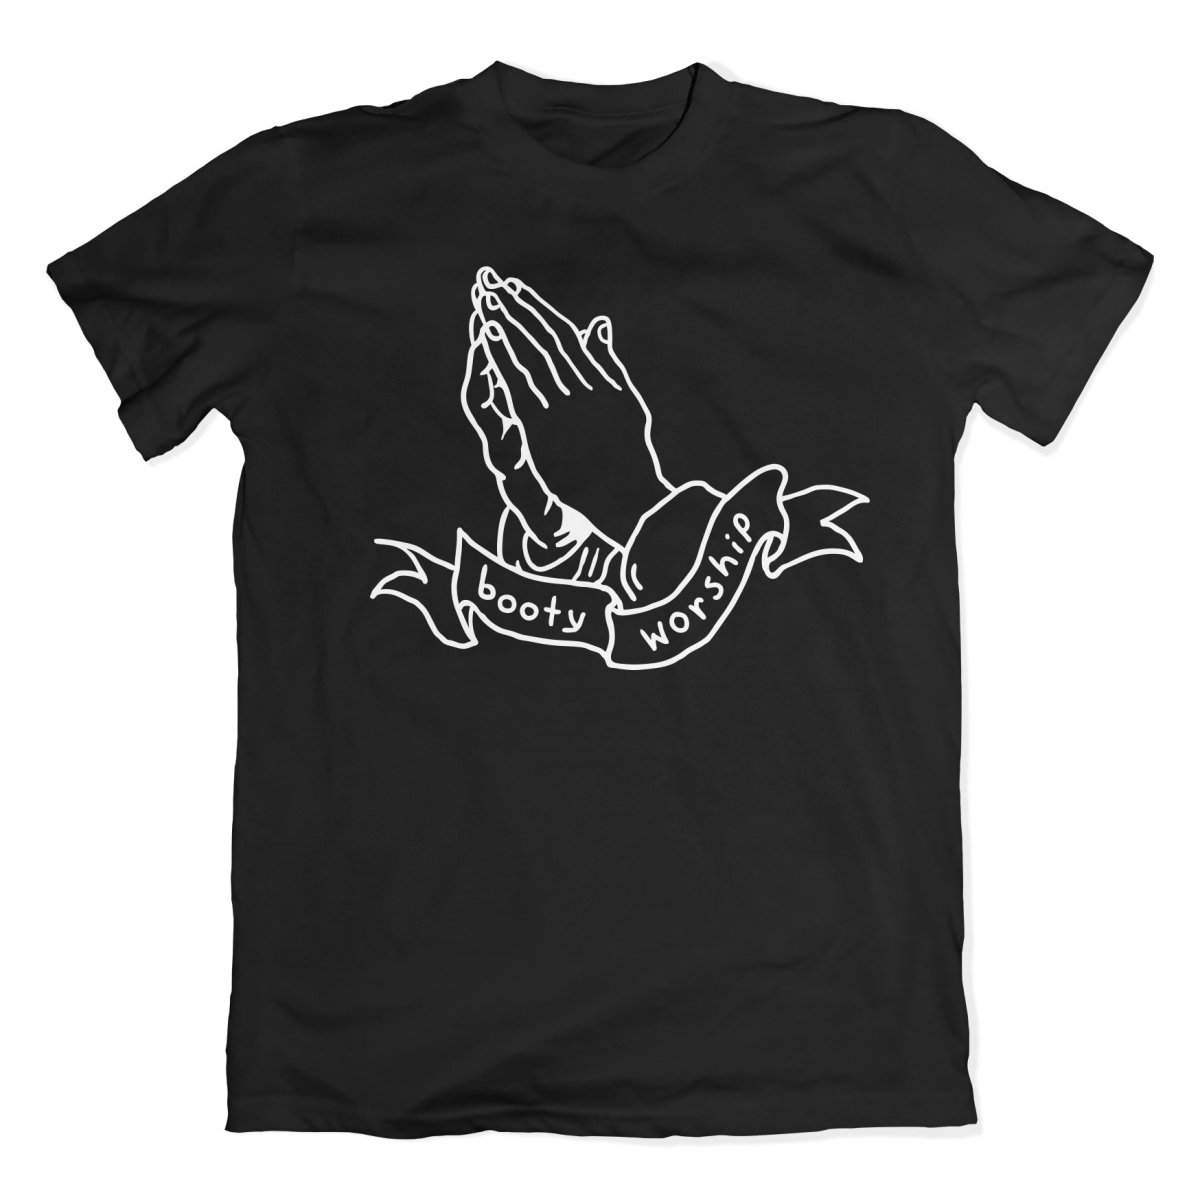 Booty Worship T-Shirt - T-Shirt - Pretty Bad Co.